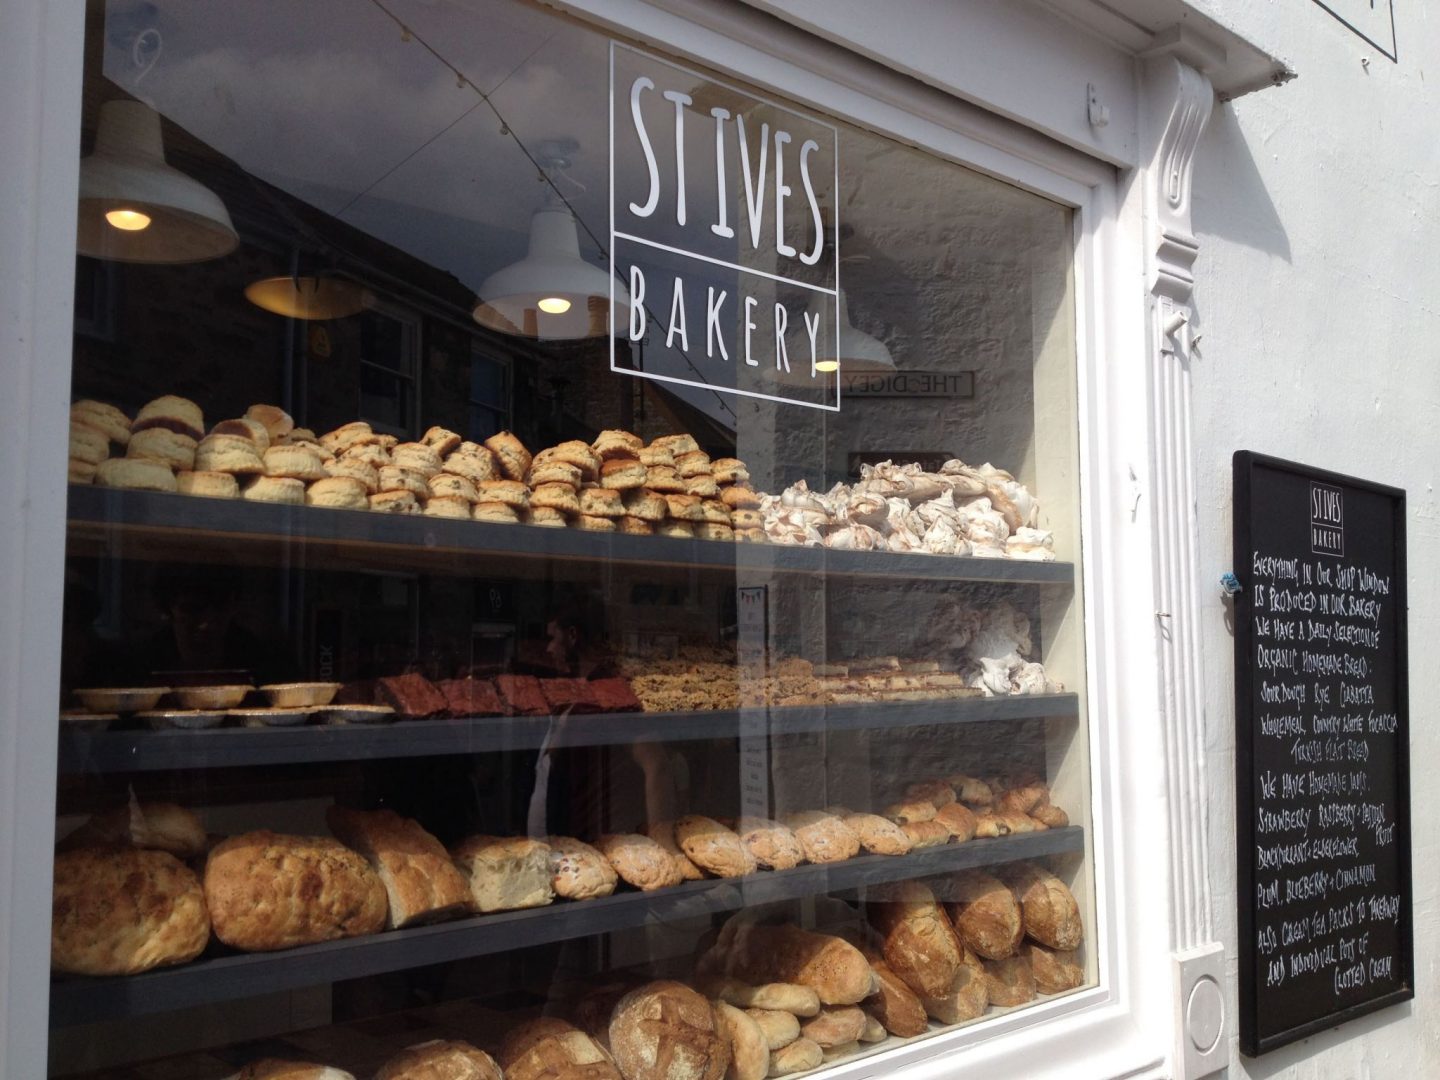 St Ives bakery, Cornwall